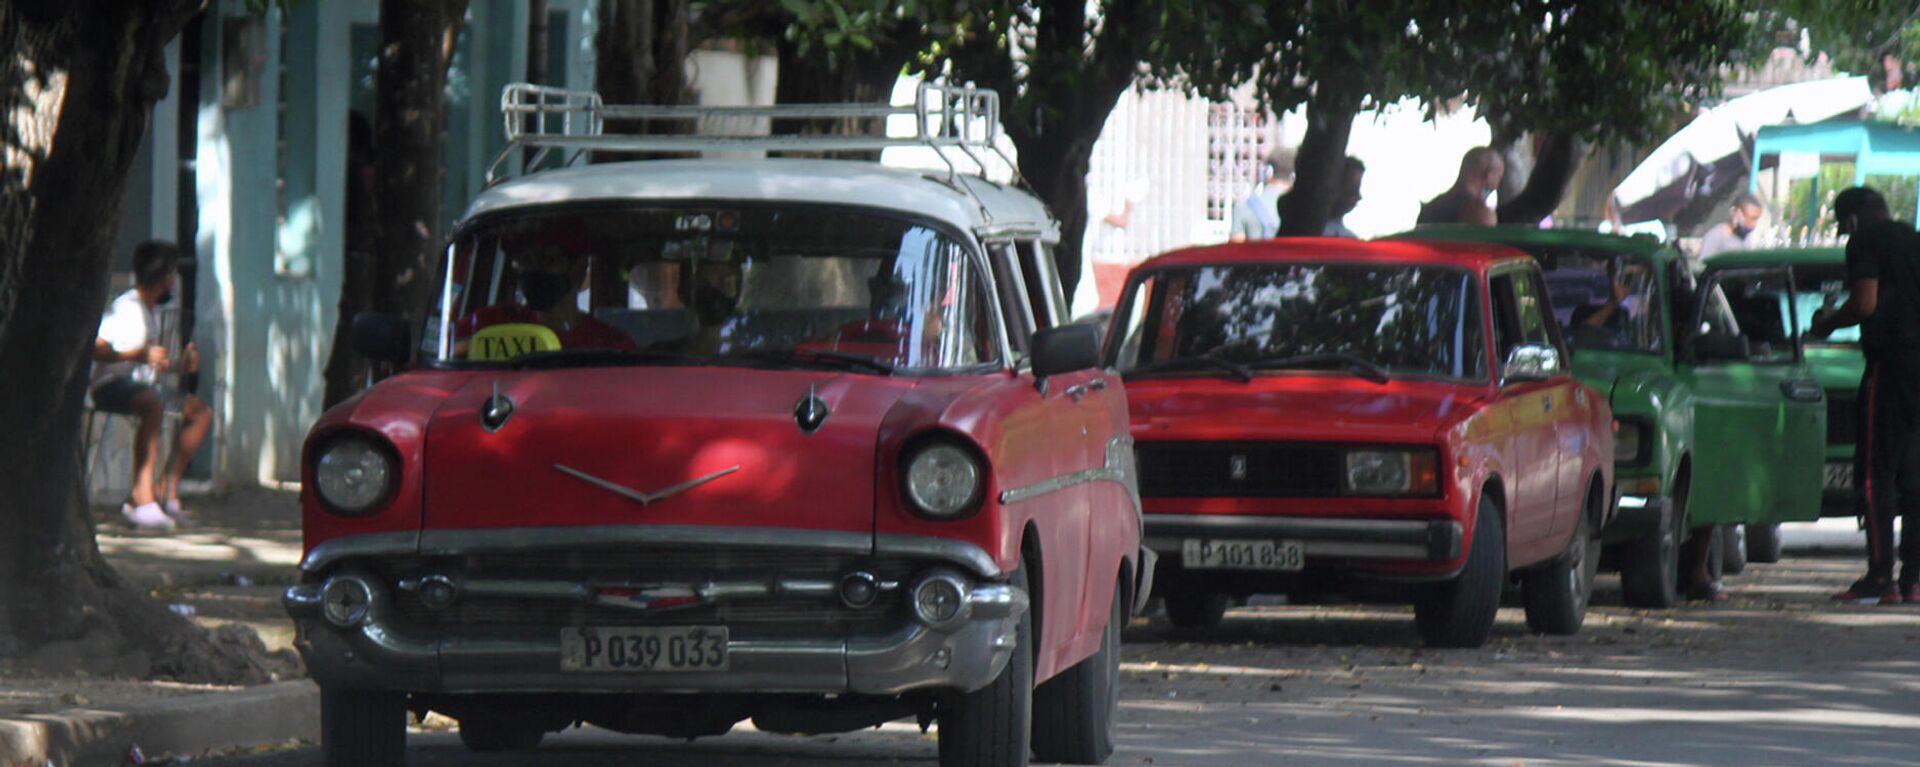 Autos de fabricación estadounidense con más de 65 años de explotación que aun circulan por las calles de Cuba - Sputnik Mundo, 1920, 04.10.2021